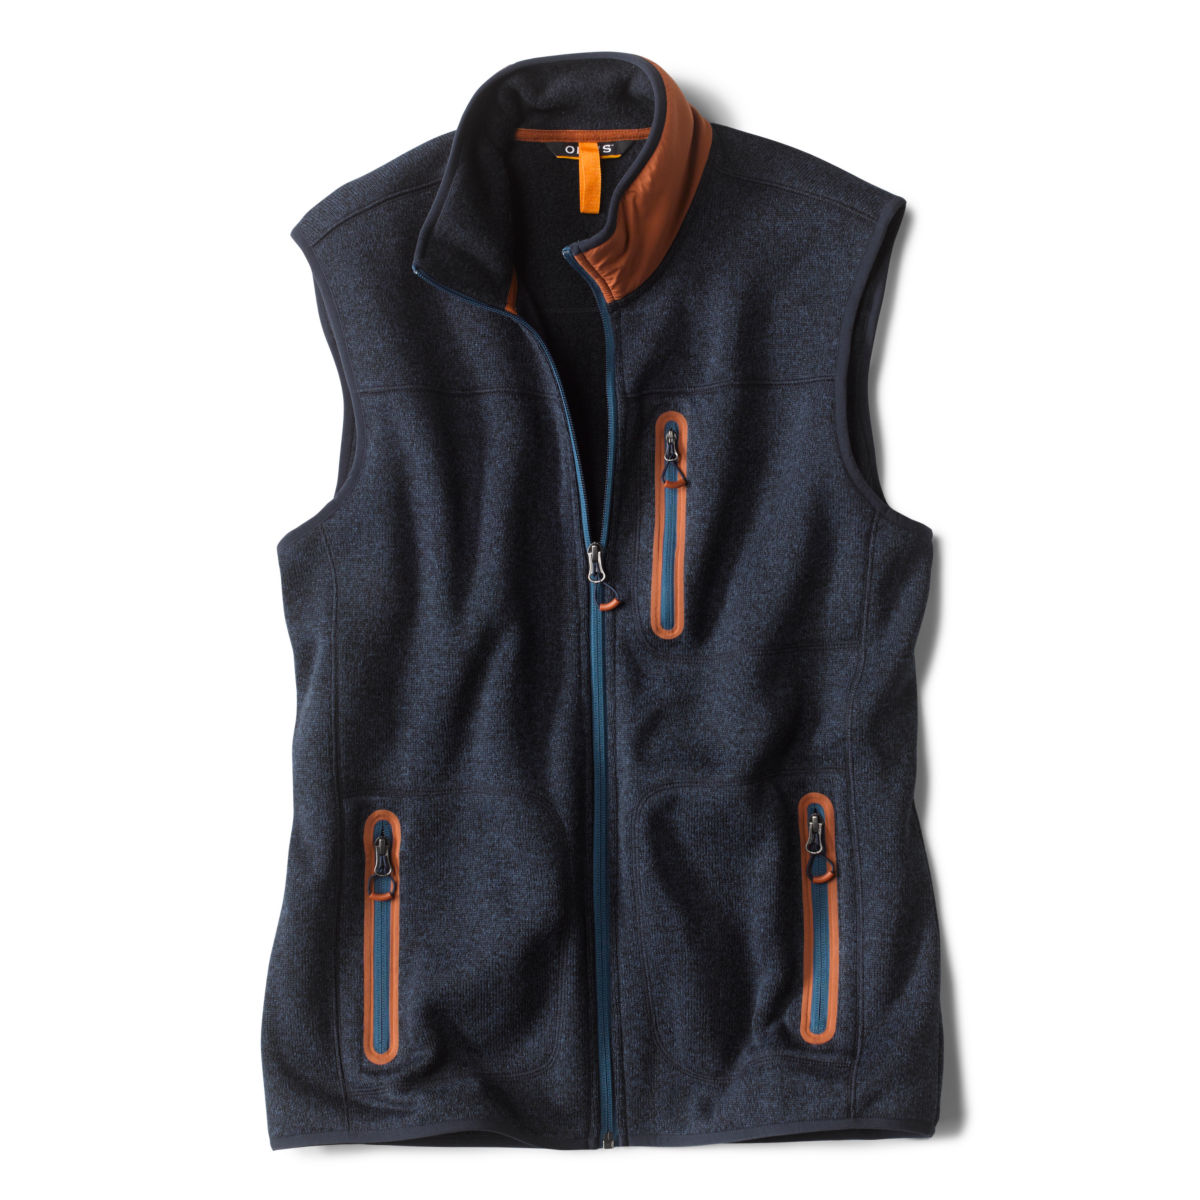 R65™ Sweater Fleece Contrast Vest - INKimage number 0